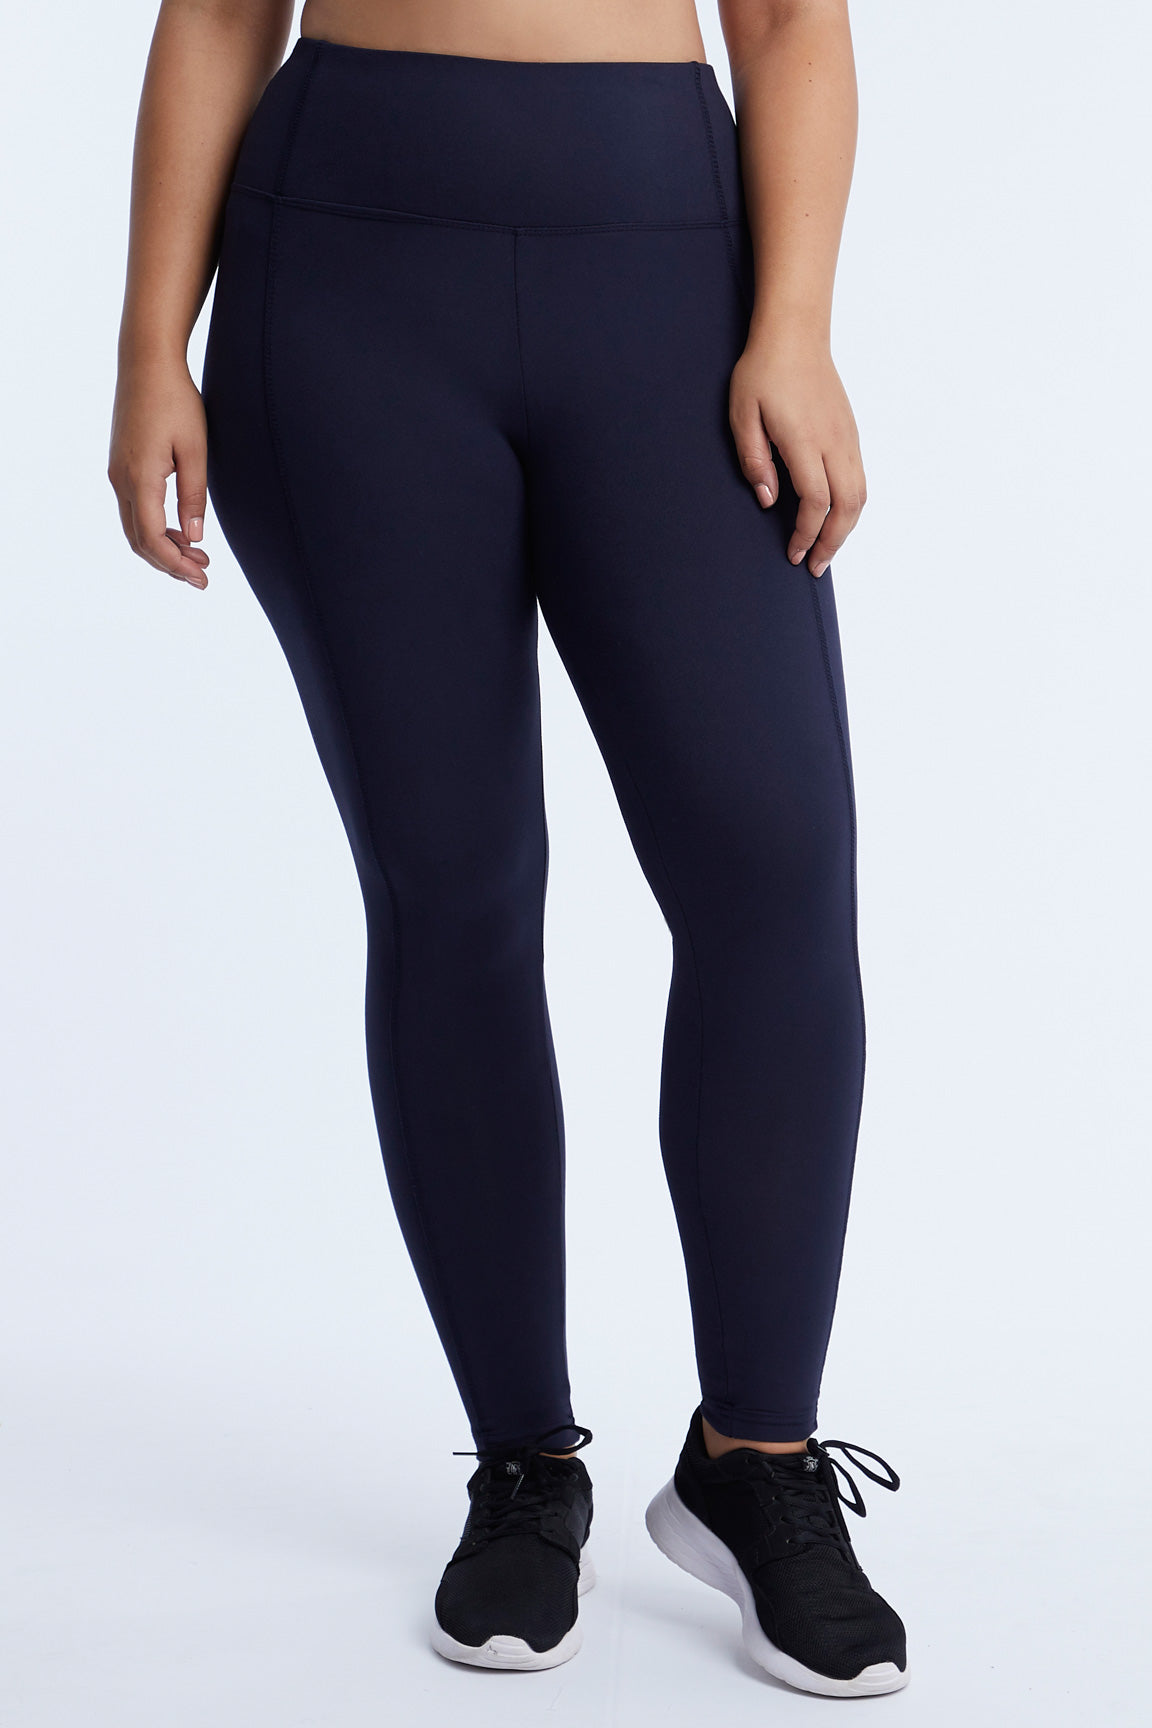 Colorfulkoala High Waisted Tummy Control Workout Leggings Ultra Soft Yoga  Pants - $23 - From Meagan